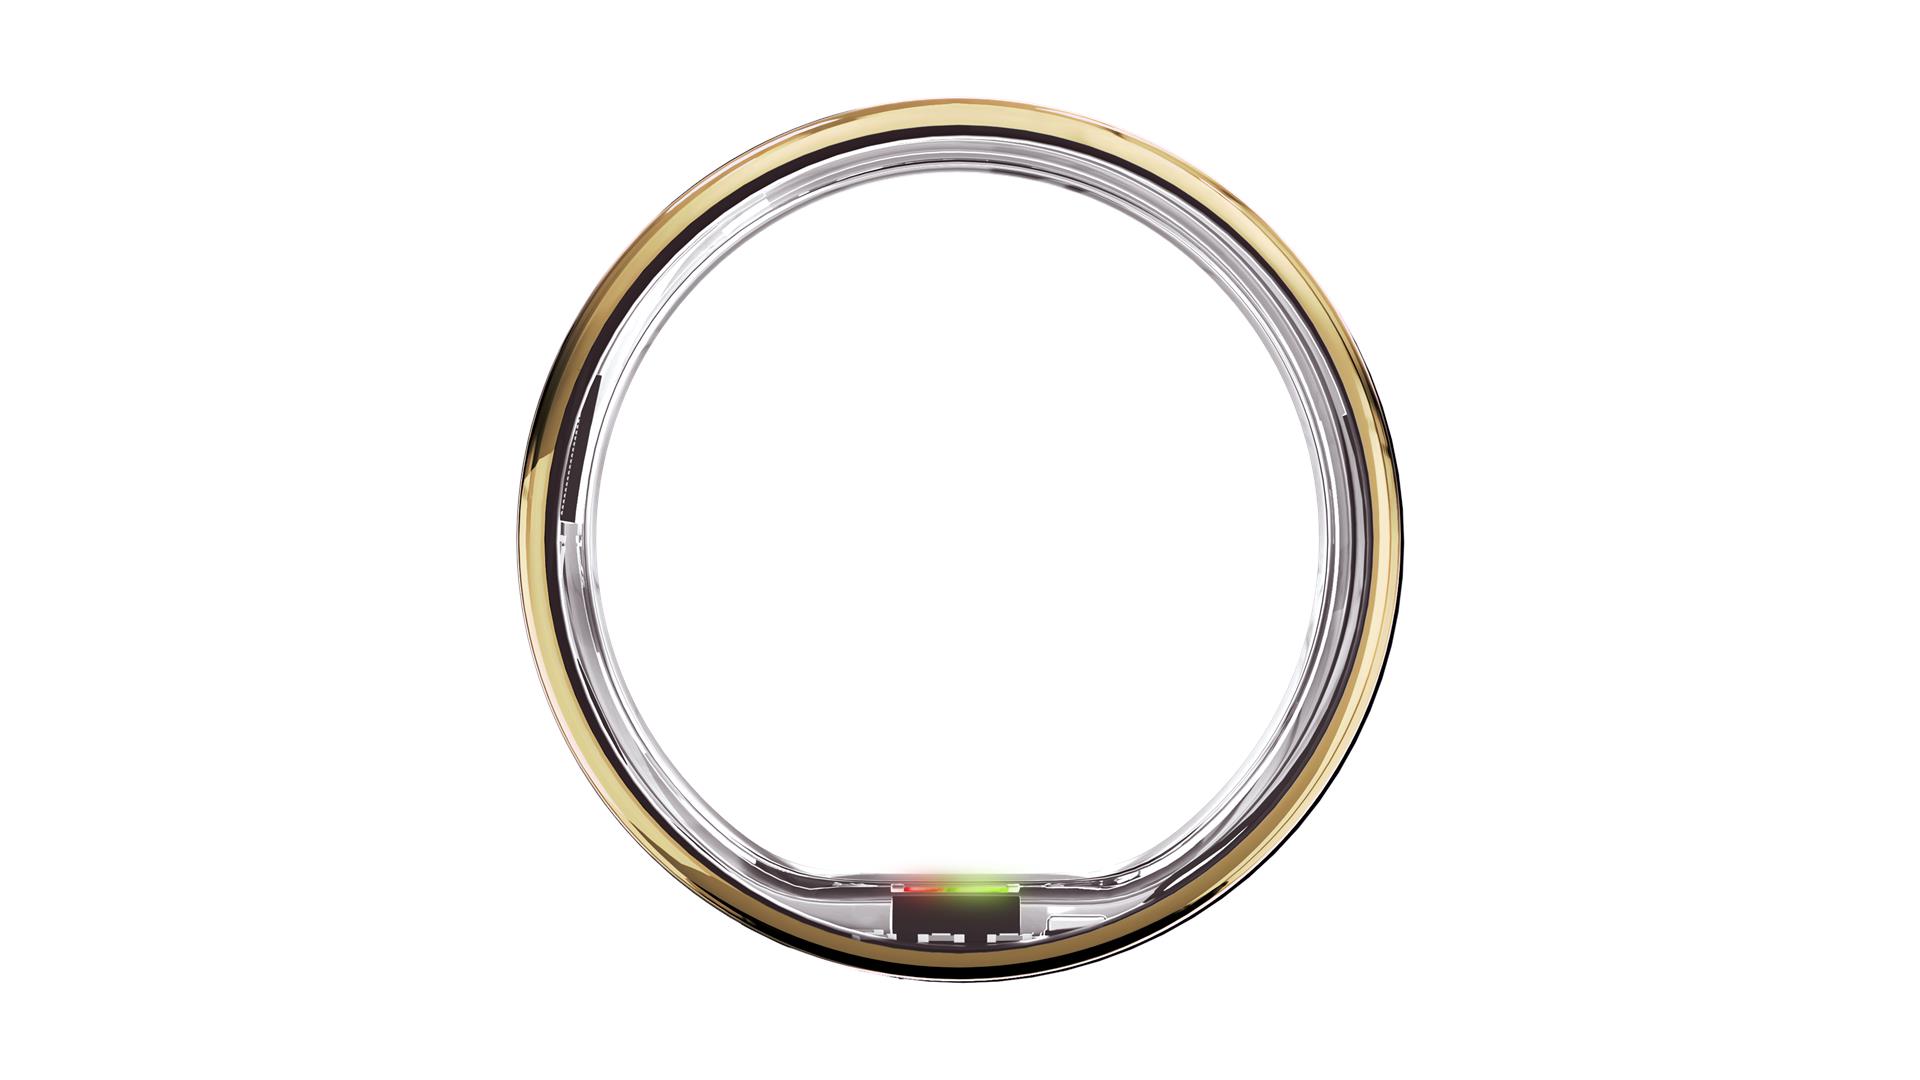 Ultrahuman Ring Air ring, Gold, 08